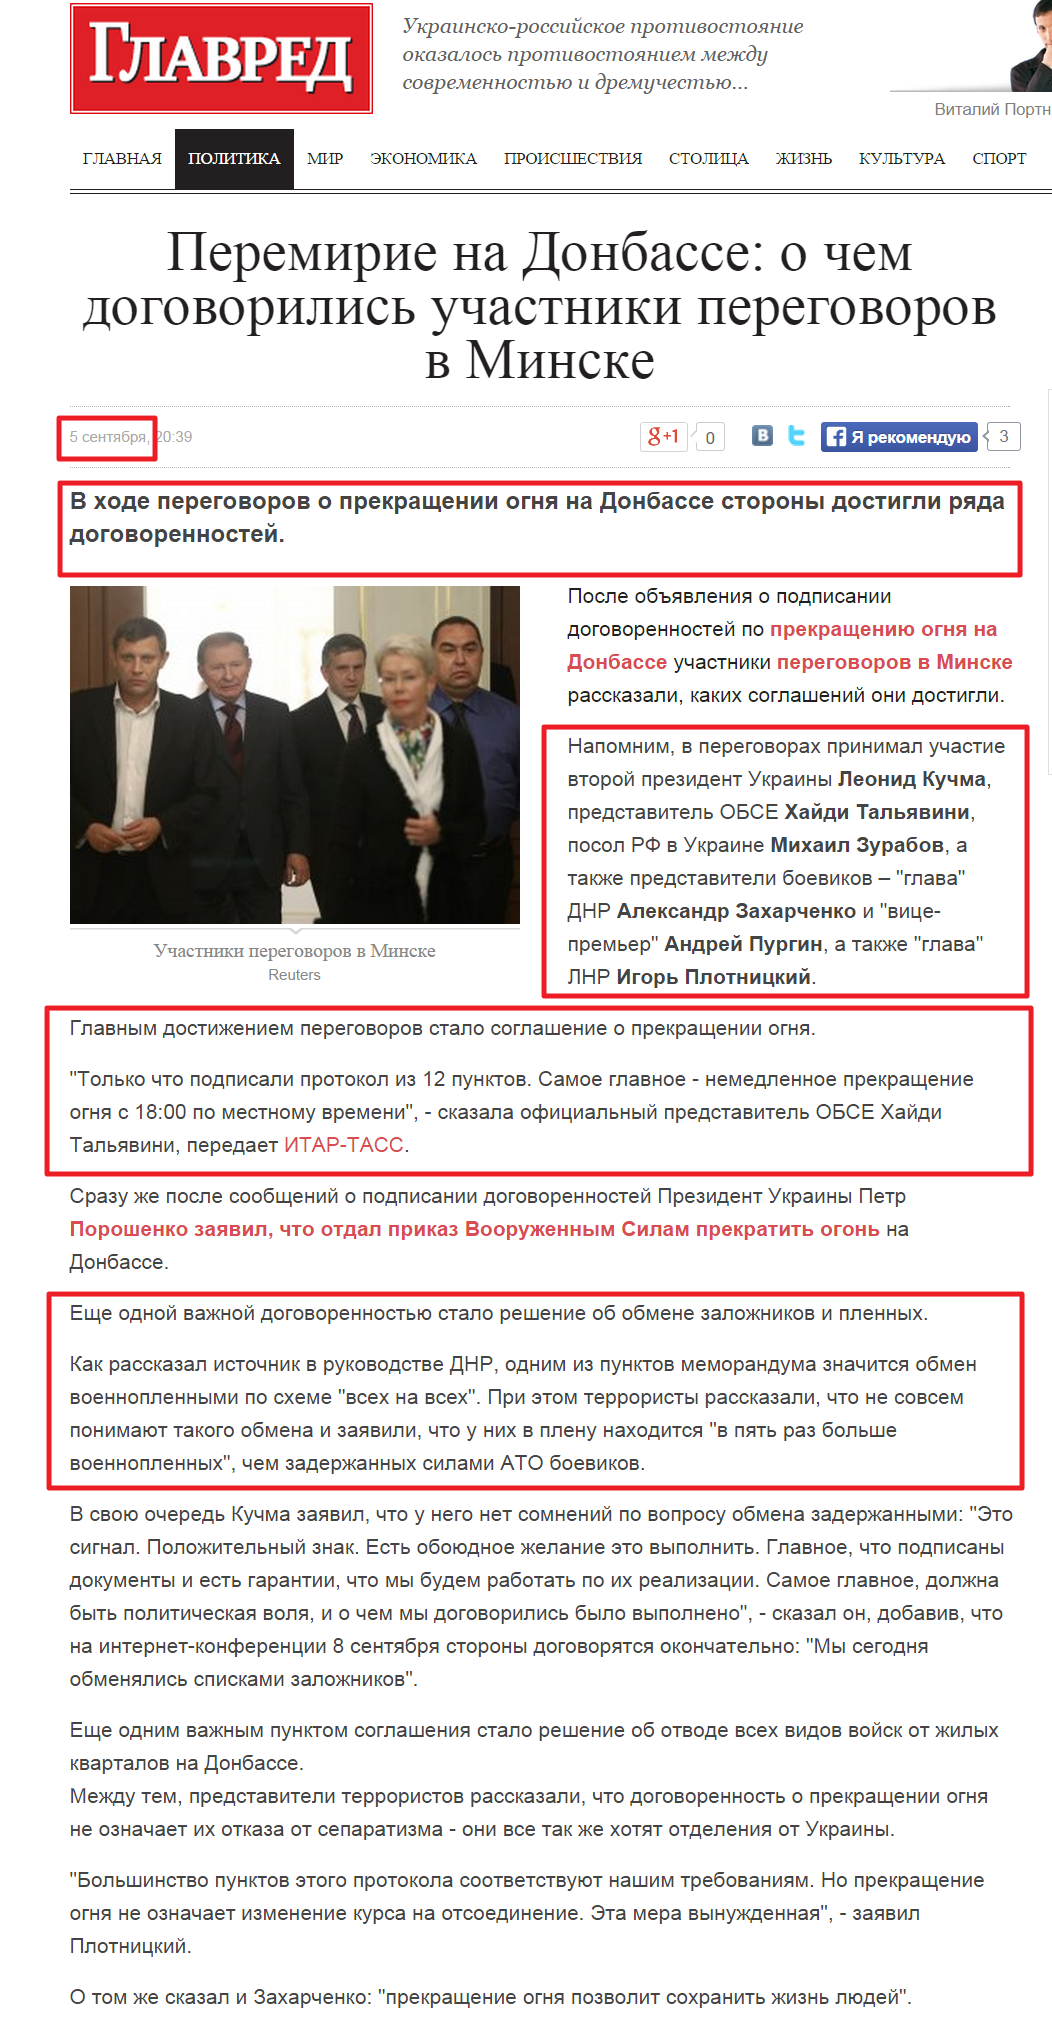 http://glavred.info/politika/peremirie-na-donbasse-o-chem-dogovorilis-uchastniki-peregovorov-v-minske-289443.html